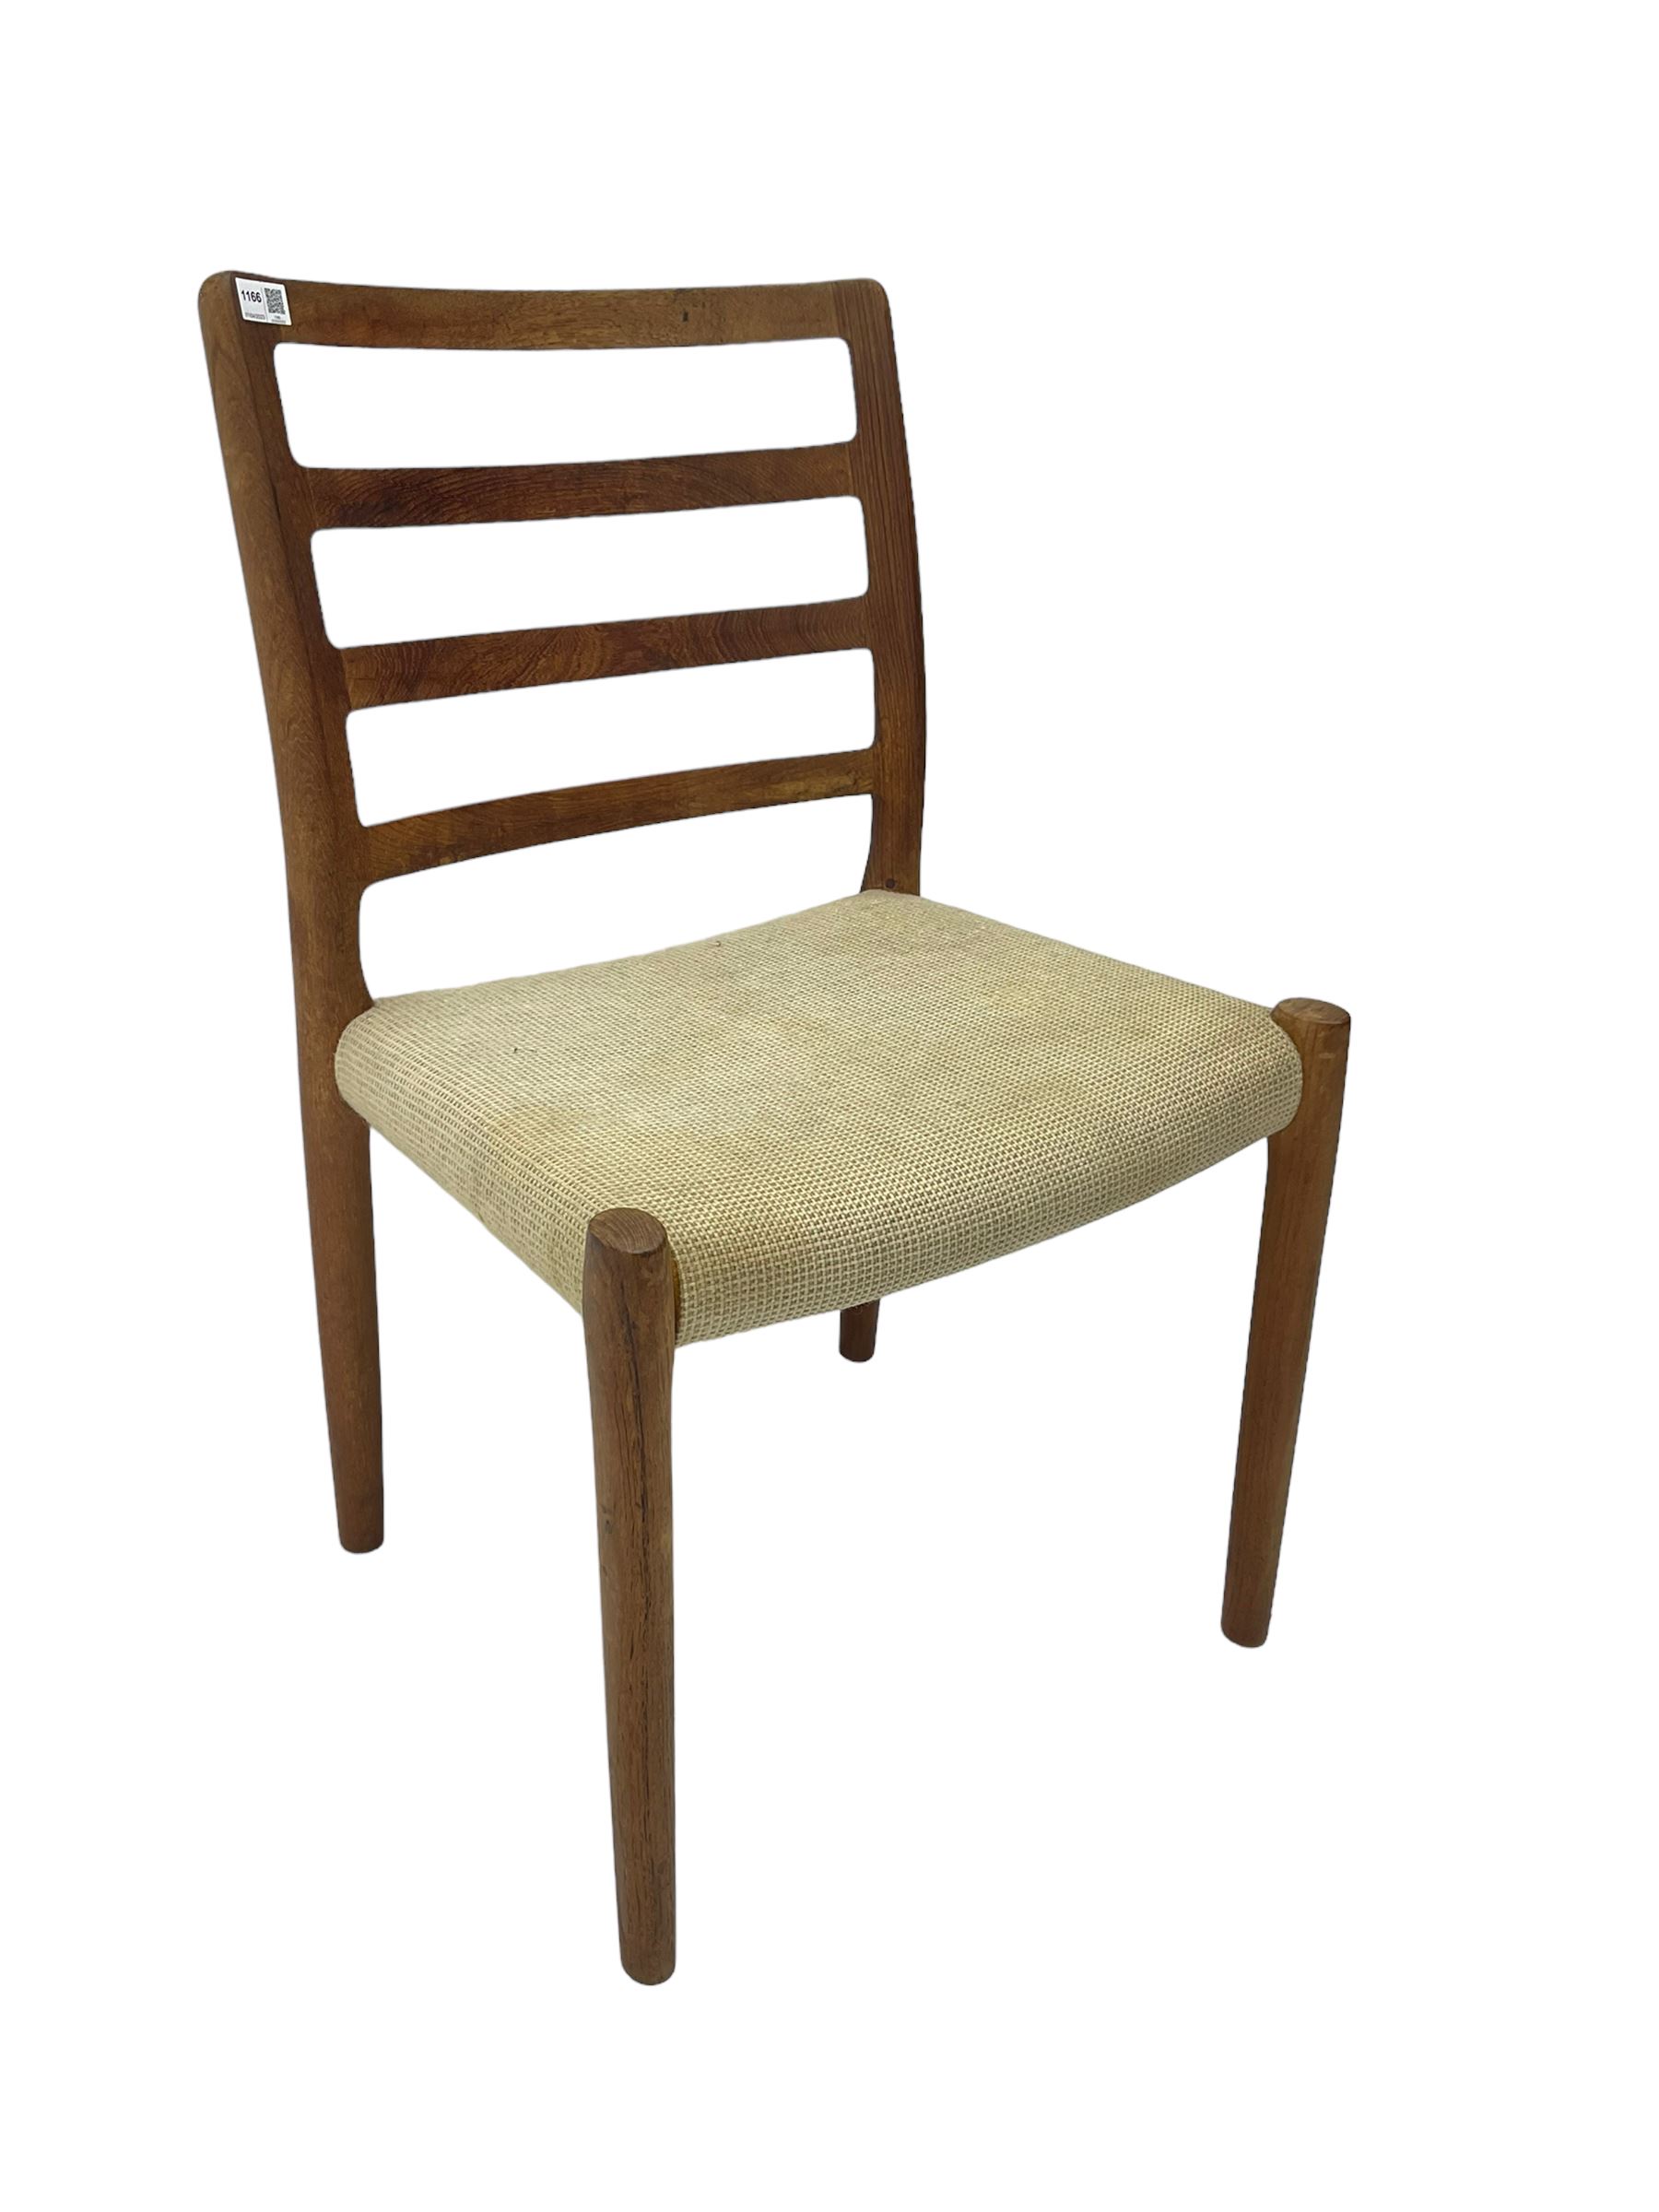 Niels Otto M�ller for J L Moller - 20th century Danish teak 'model 85' chair - Image 3 of 7